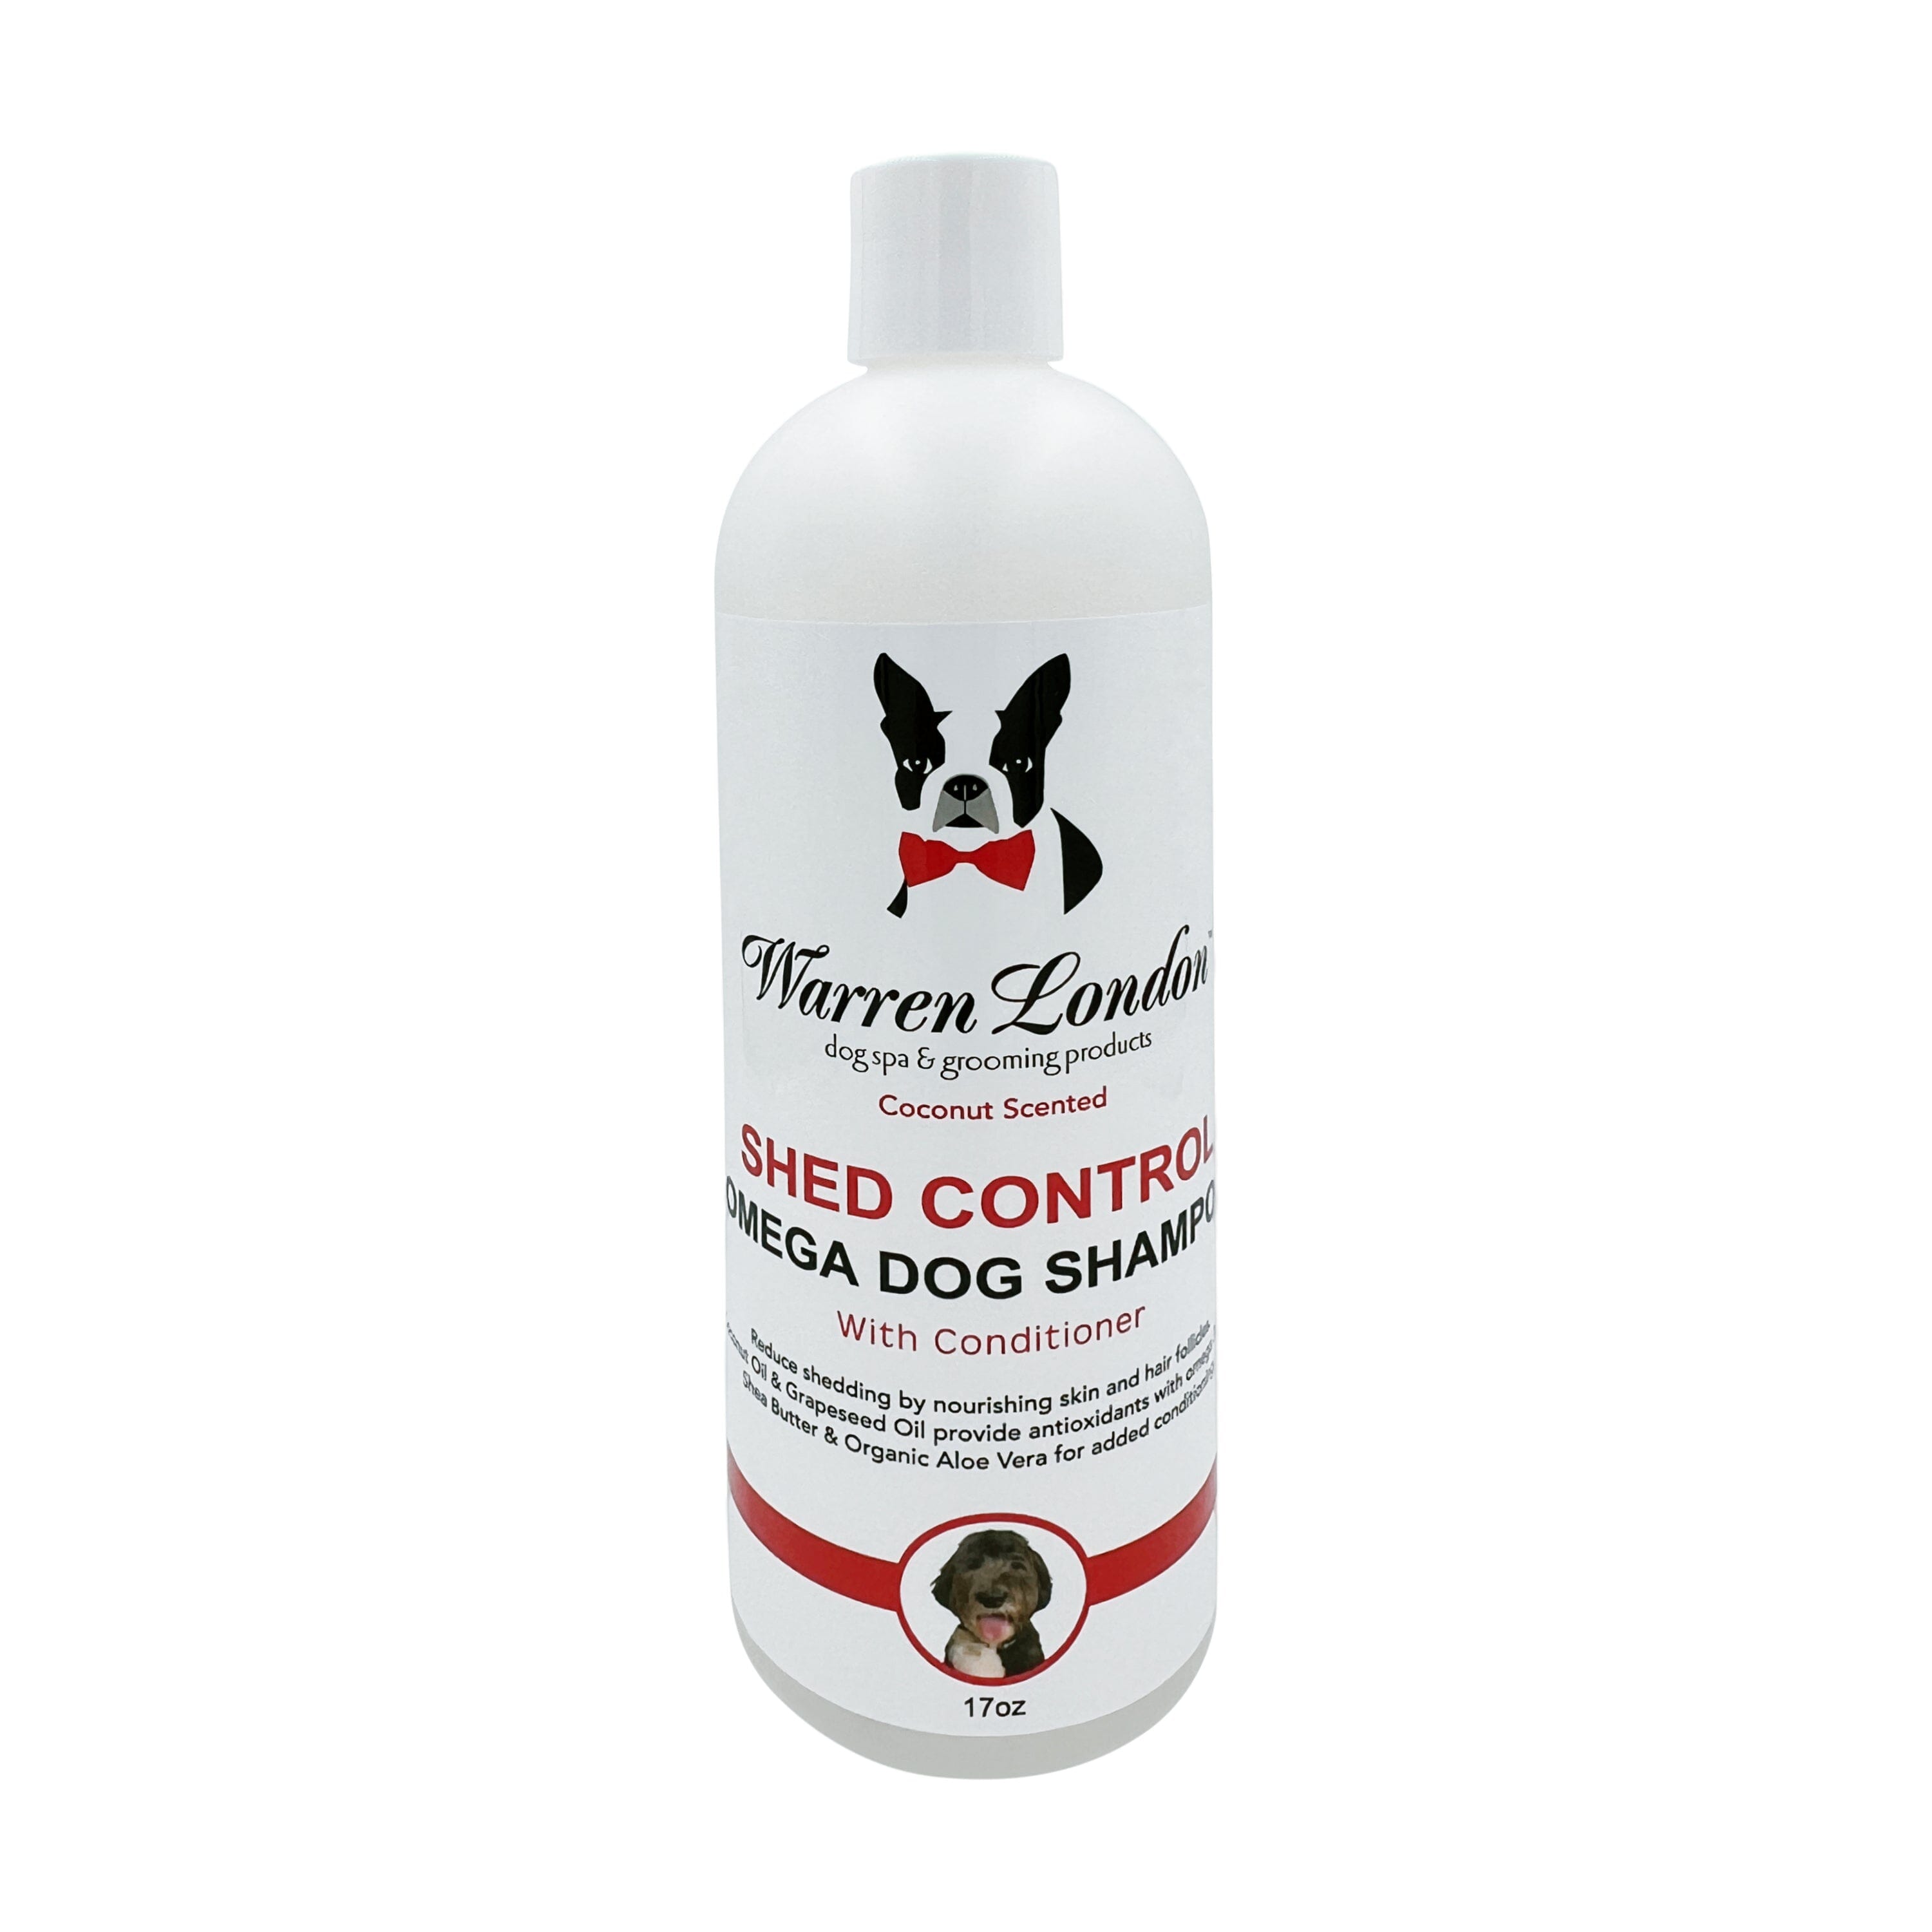 Magic Black Brightening Dog Shampoo - Professional Size – Warren London